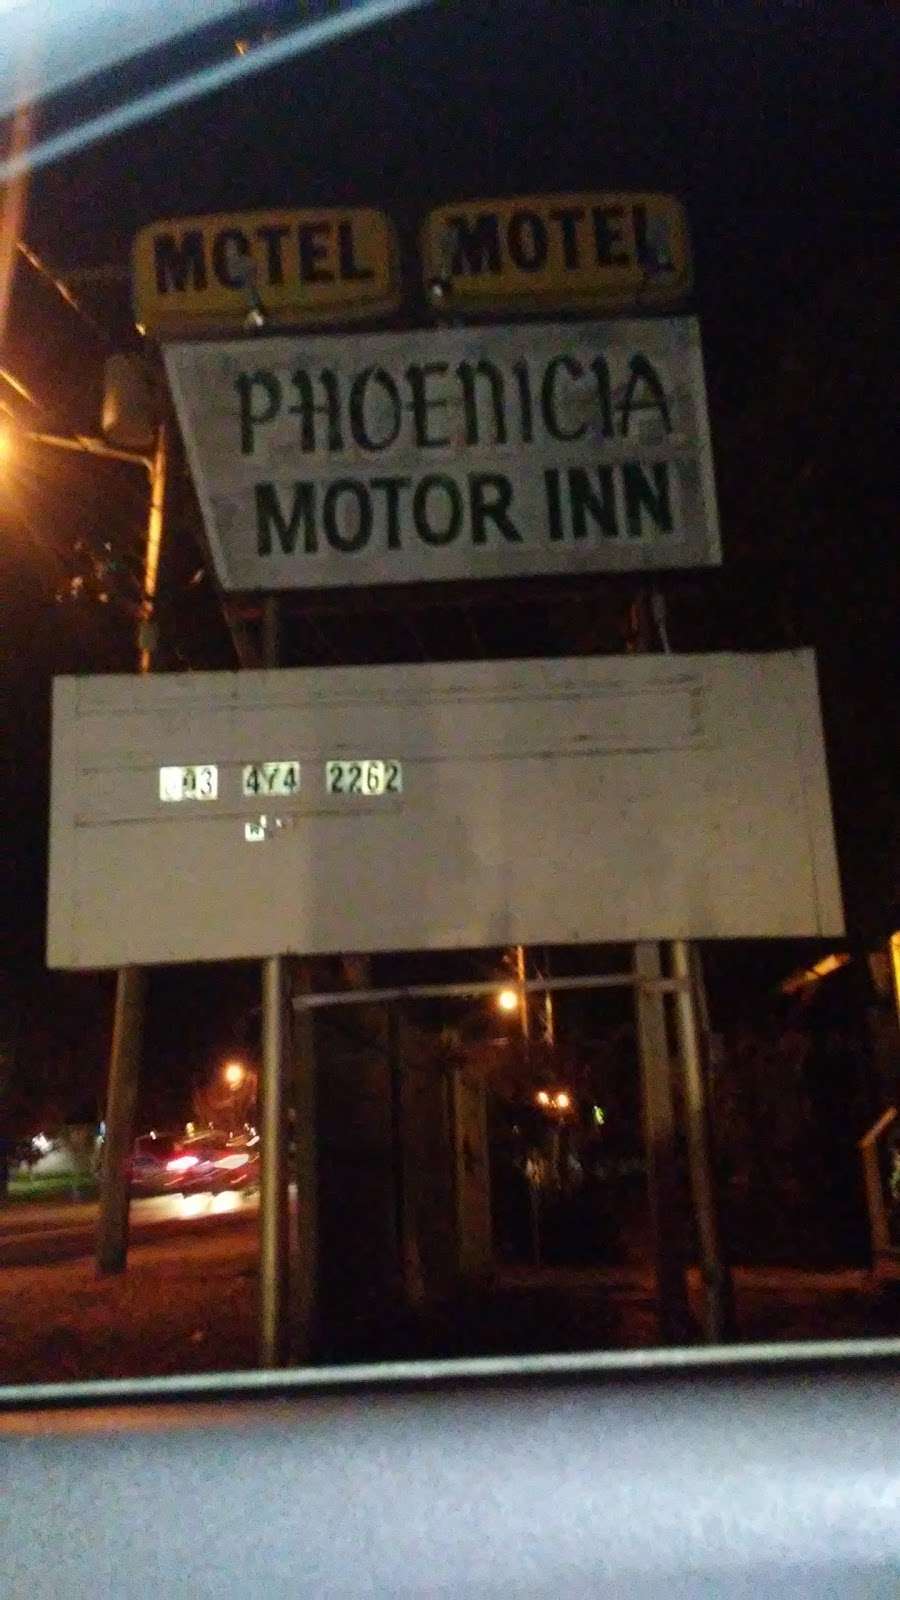 Phoenicia Motor Inn - lodging  | Photo 1 of 2 | Address: 131 Lafayette Rd, Seabrook, NH 03874, USA | Phone: (603) 474-2262